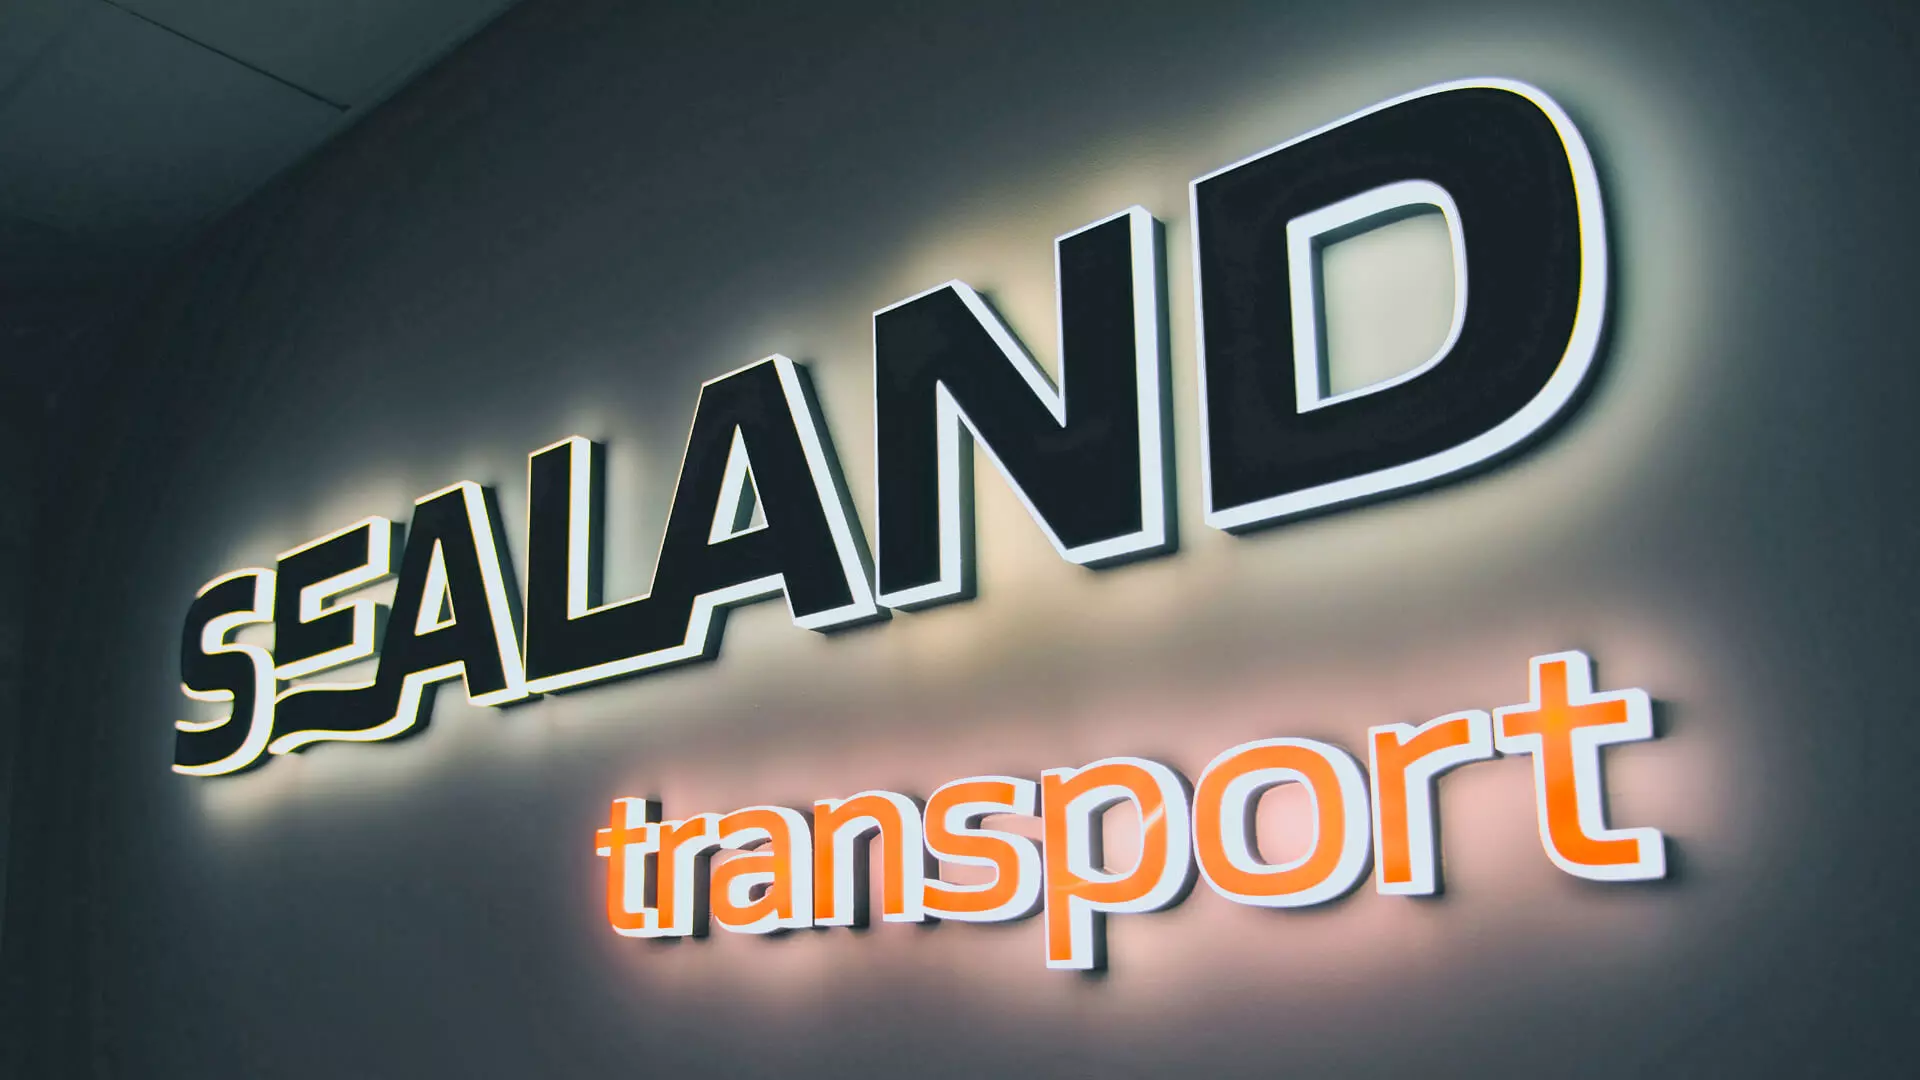 Sealand transport - letters shining sideways in the office